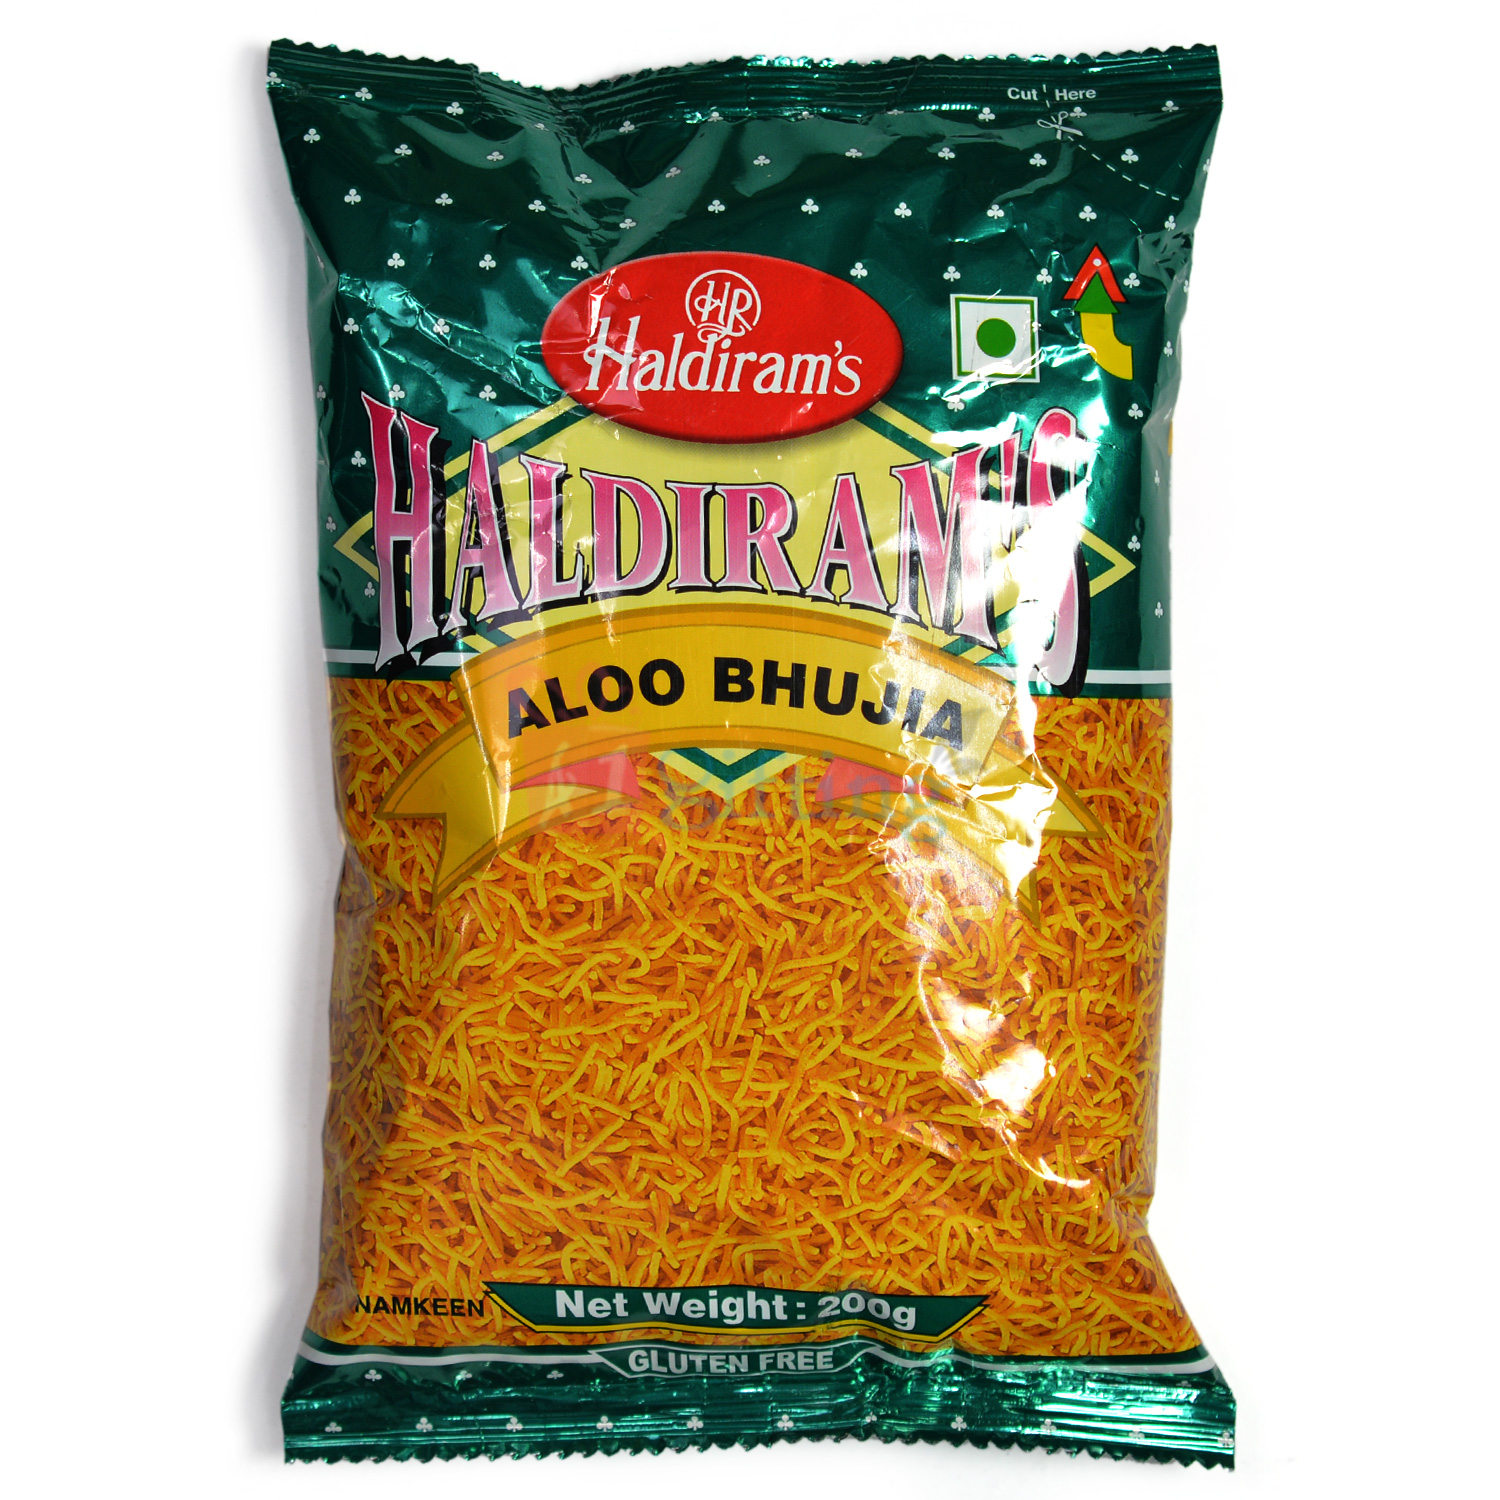 Haldirams Aloo bhujia